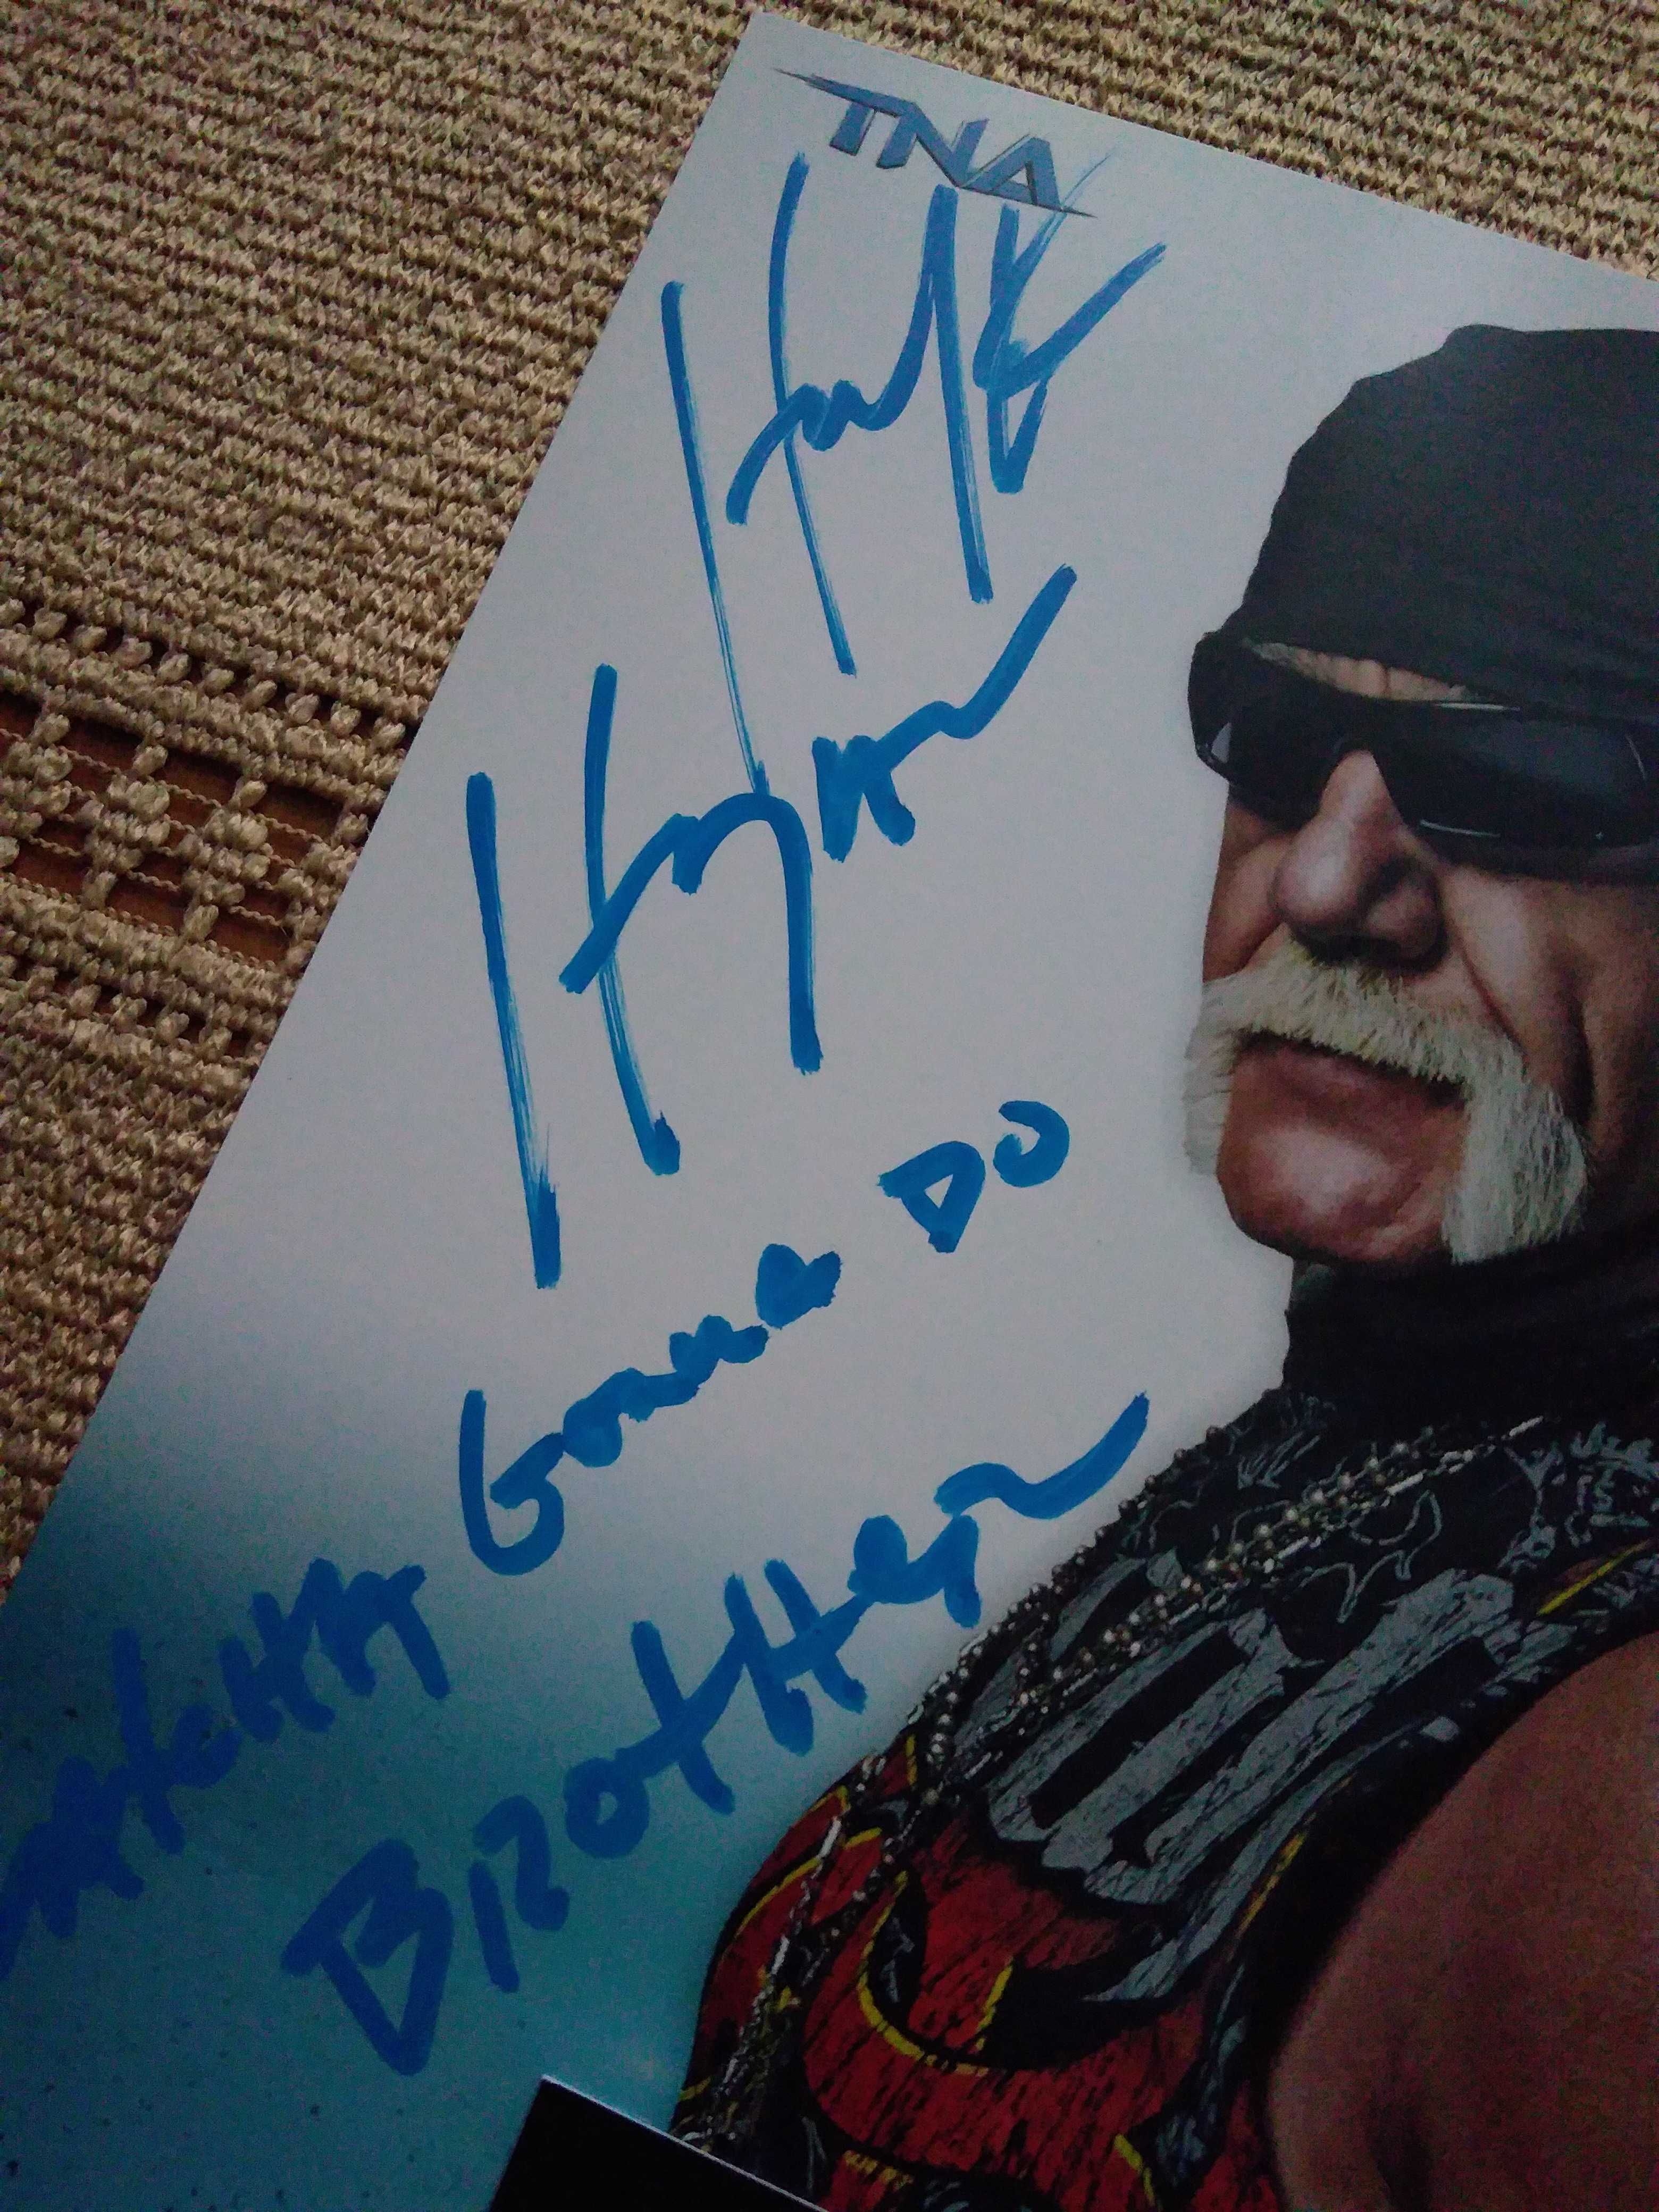 Wwe tna roh wcw Hulk Hogan autograf oryginał wrestling + coa dowód